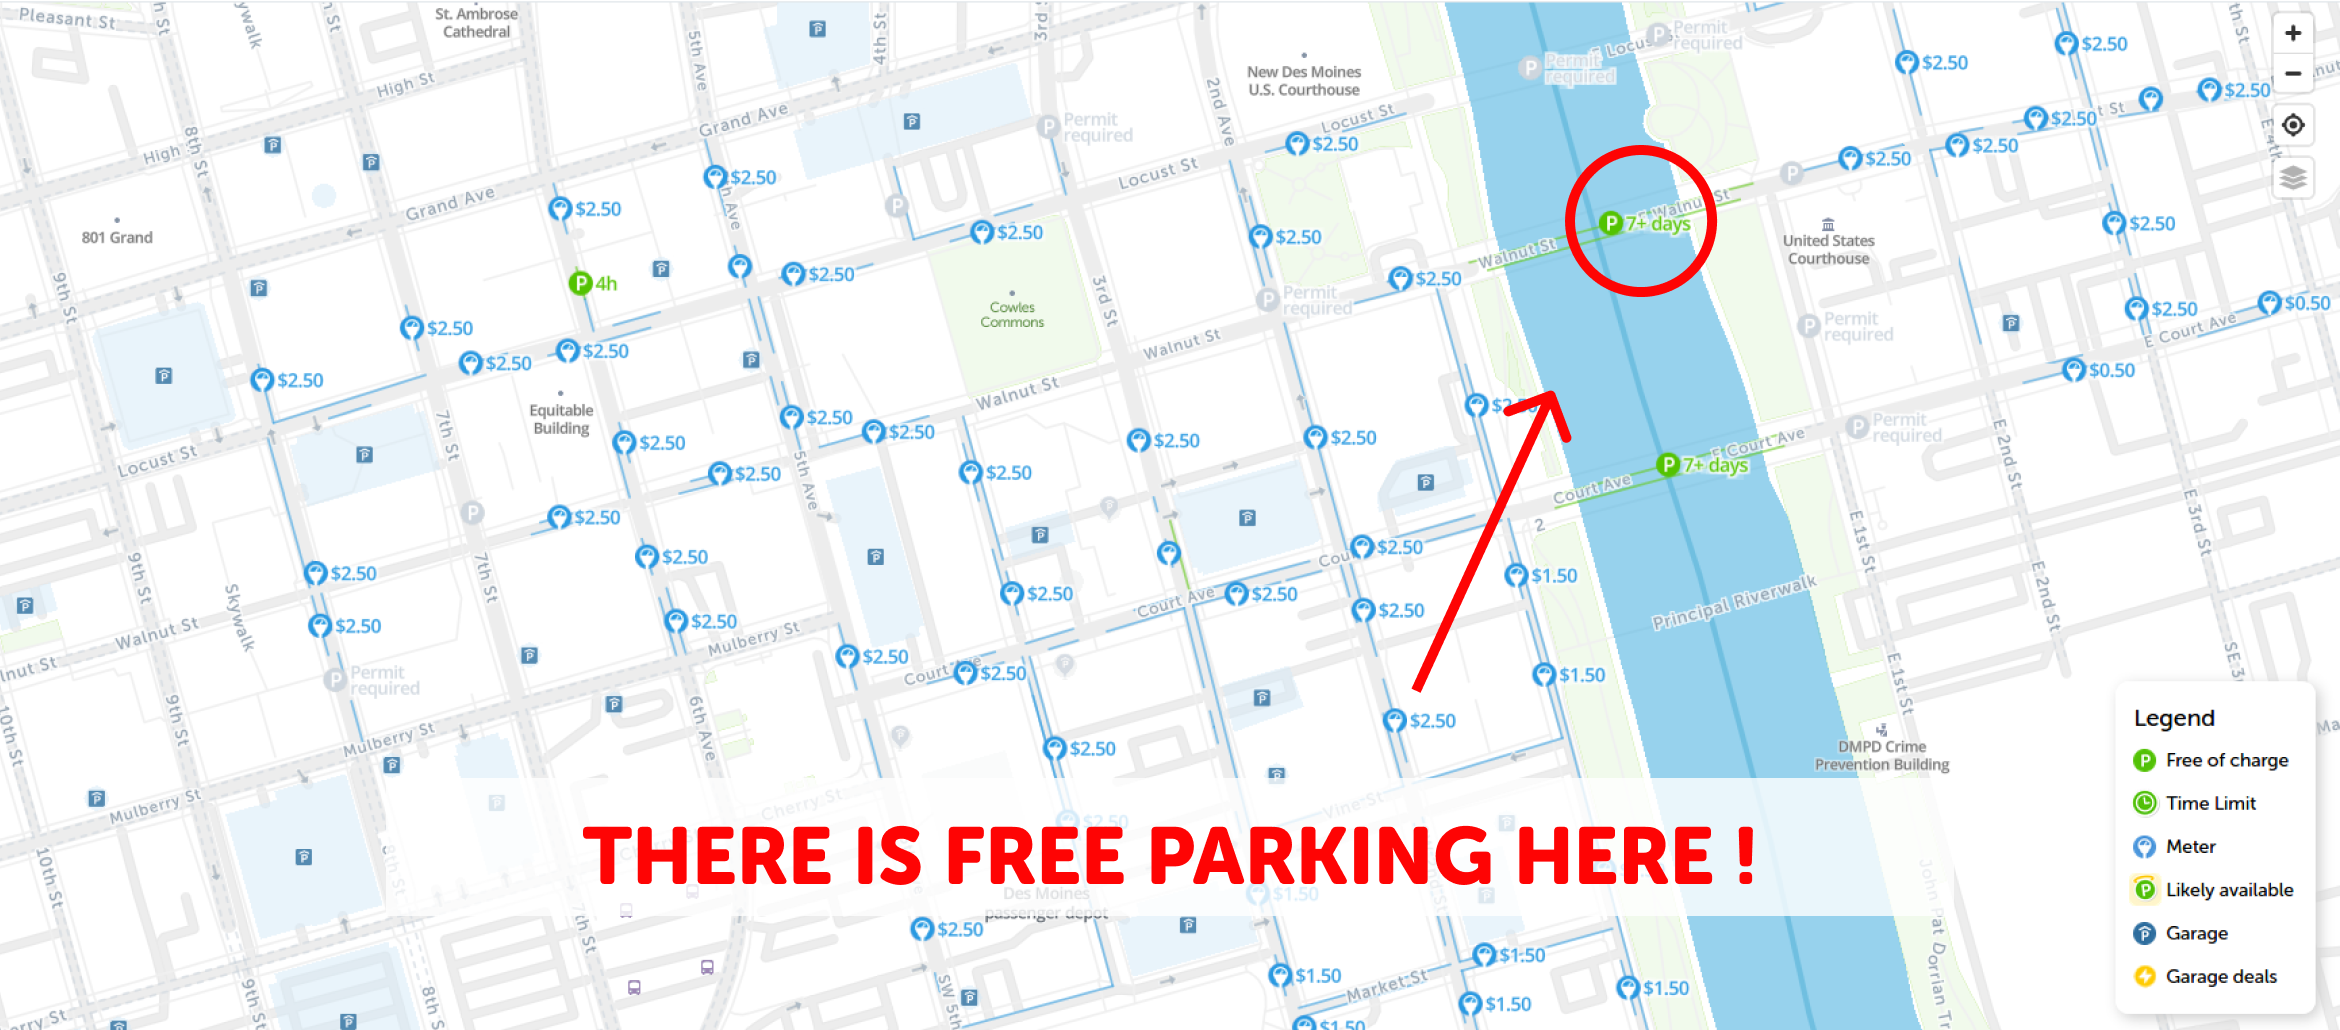 map of free parking in Des Moines - SpotAngels